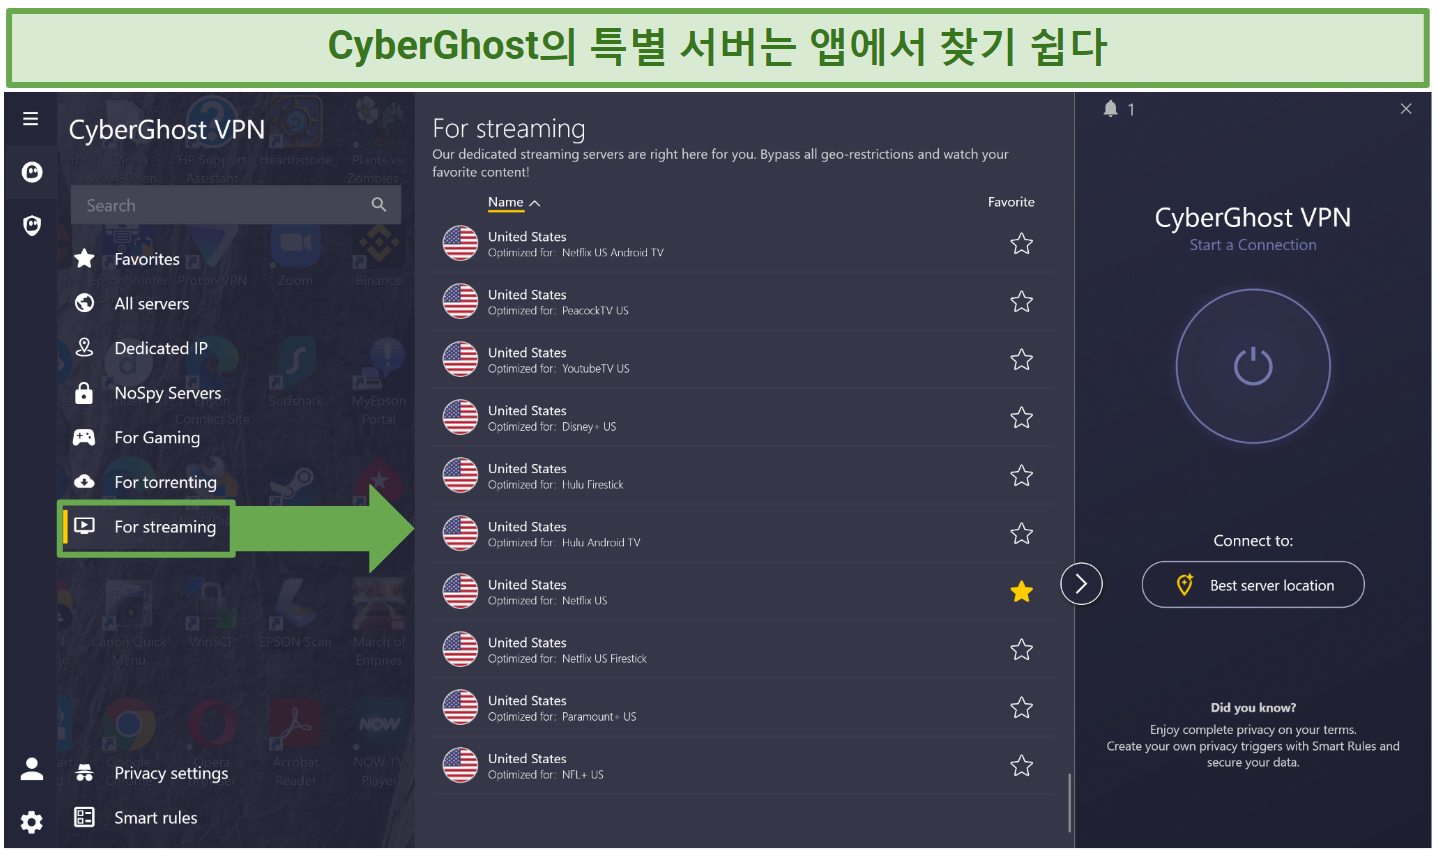 Screenshot of CyberGhost's streaming servers in the Windows app